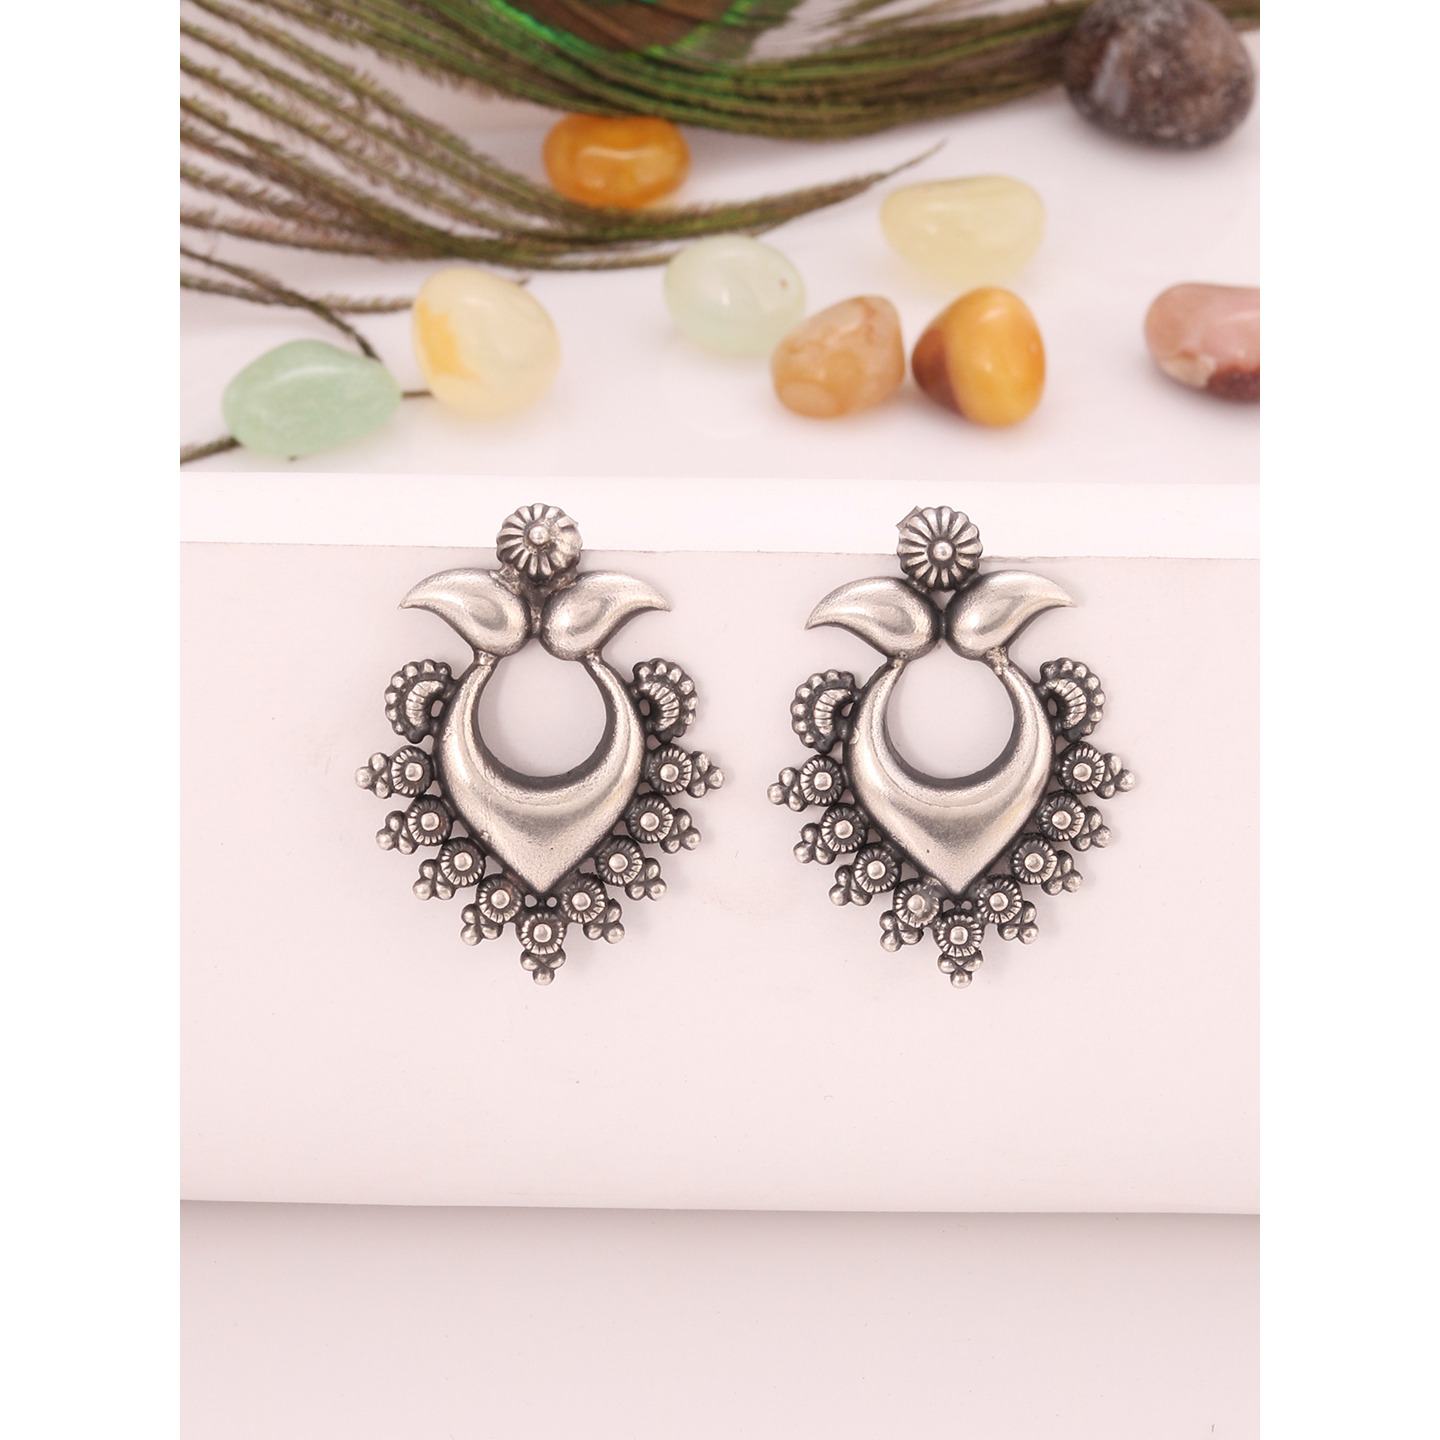 Beautiful & Floral Design Silver Studs Earrings By Silvermerc Designs